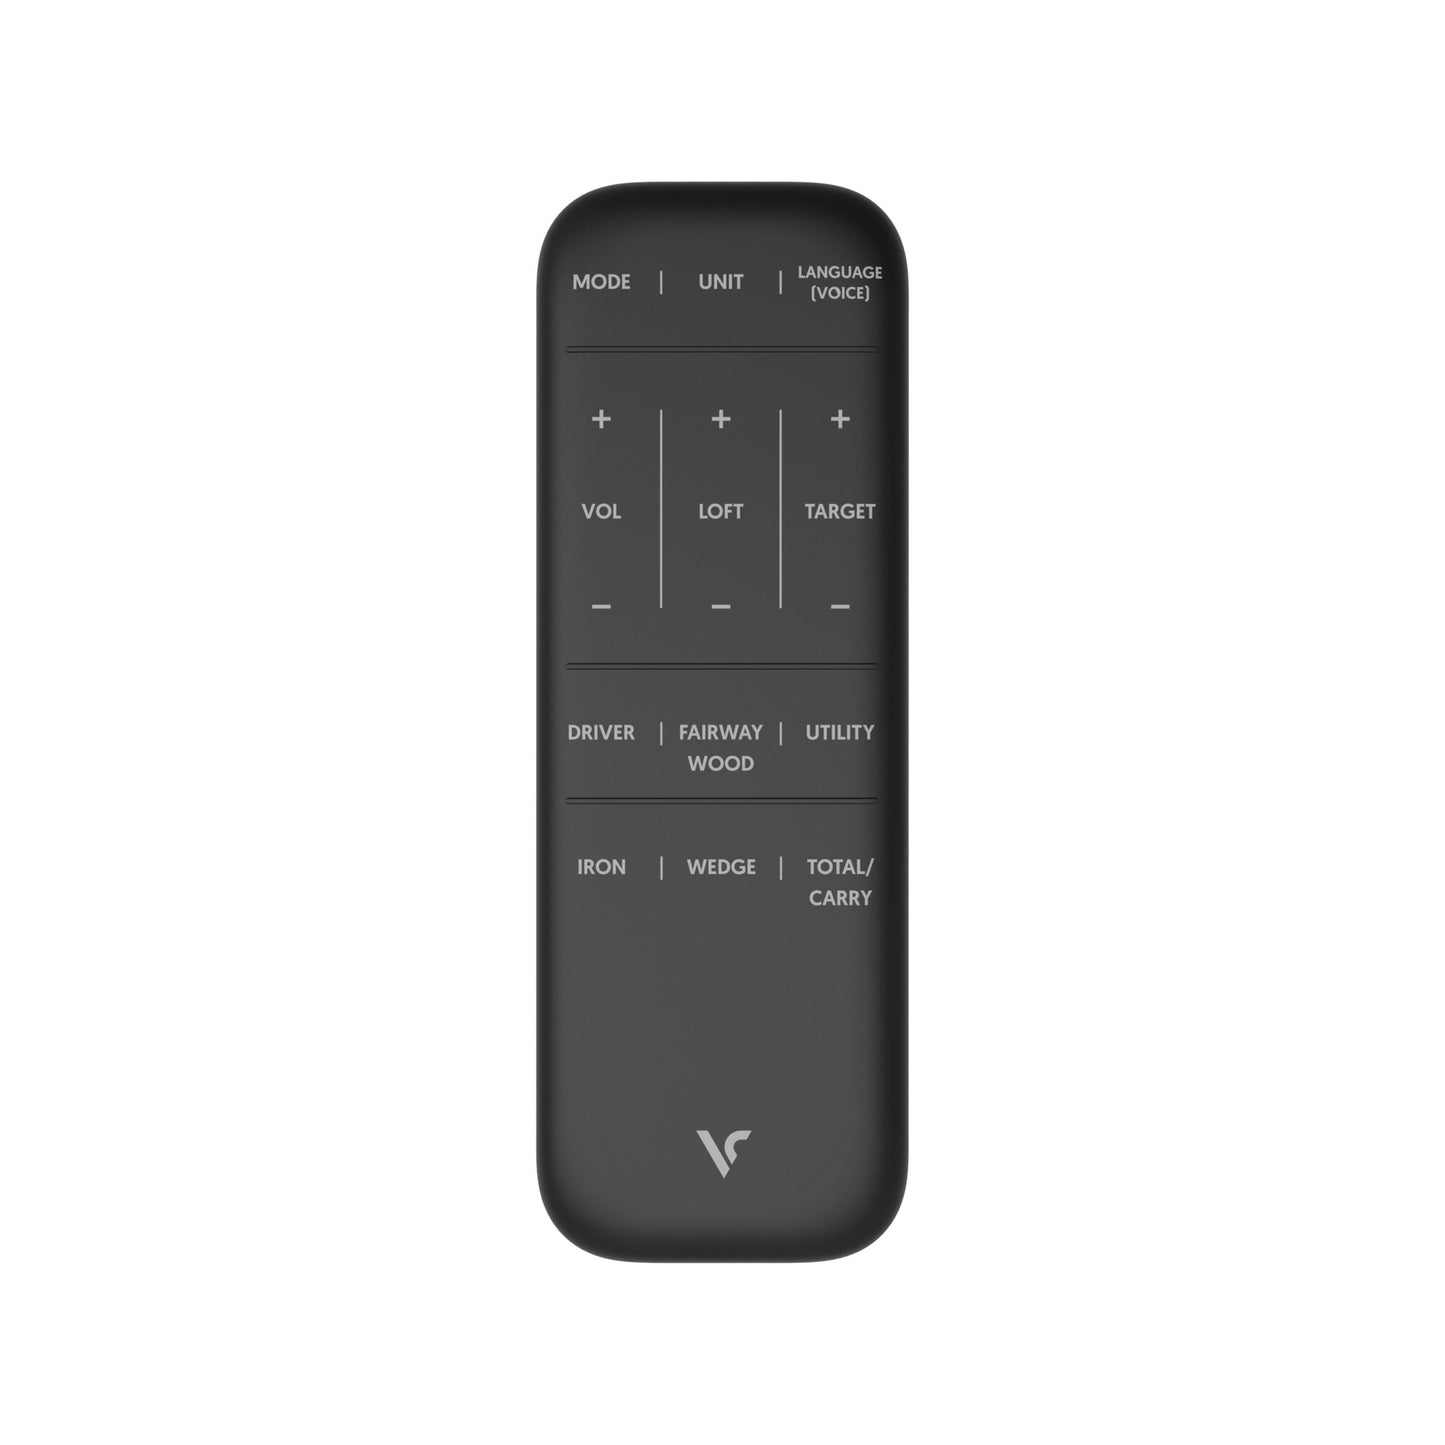 Voice Caddie SC4 Simulator + Launch Monitor